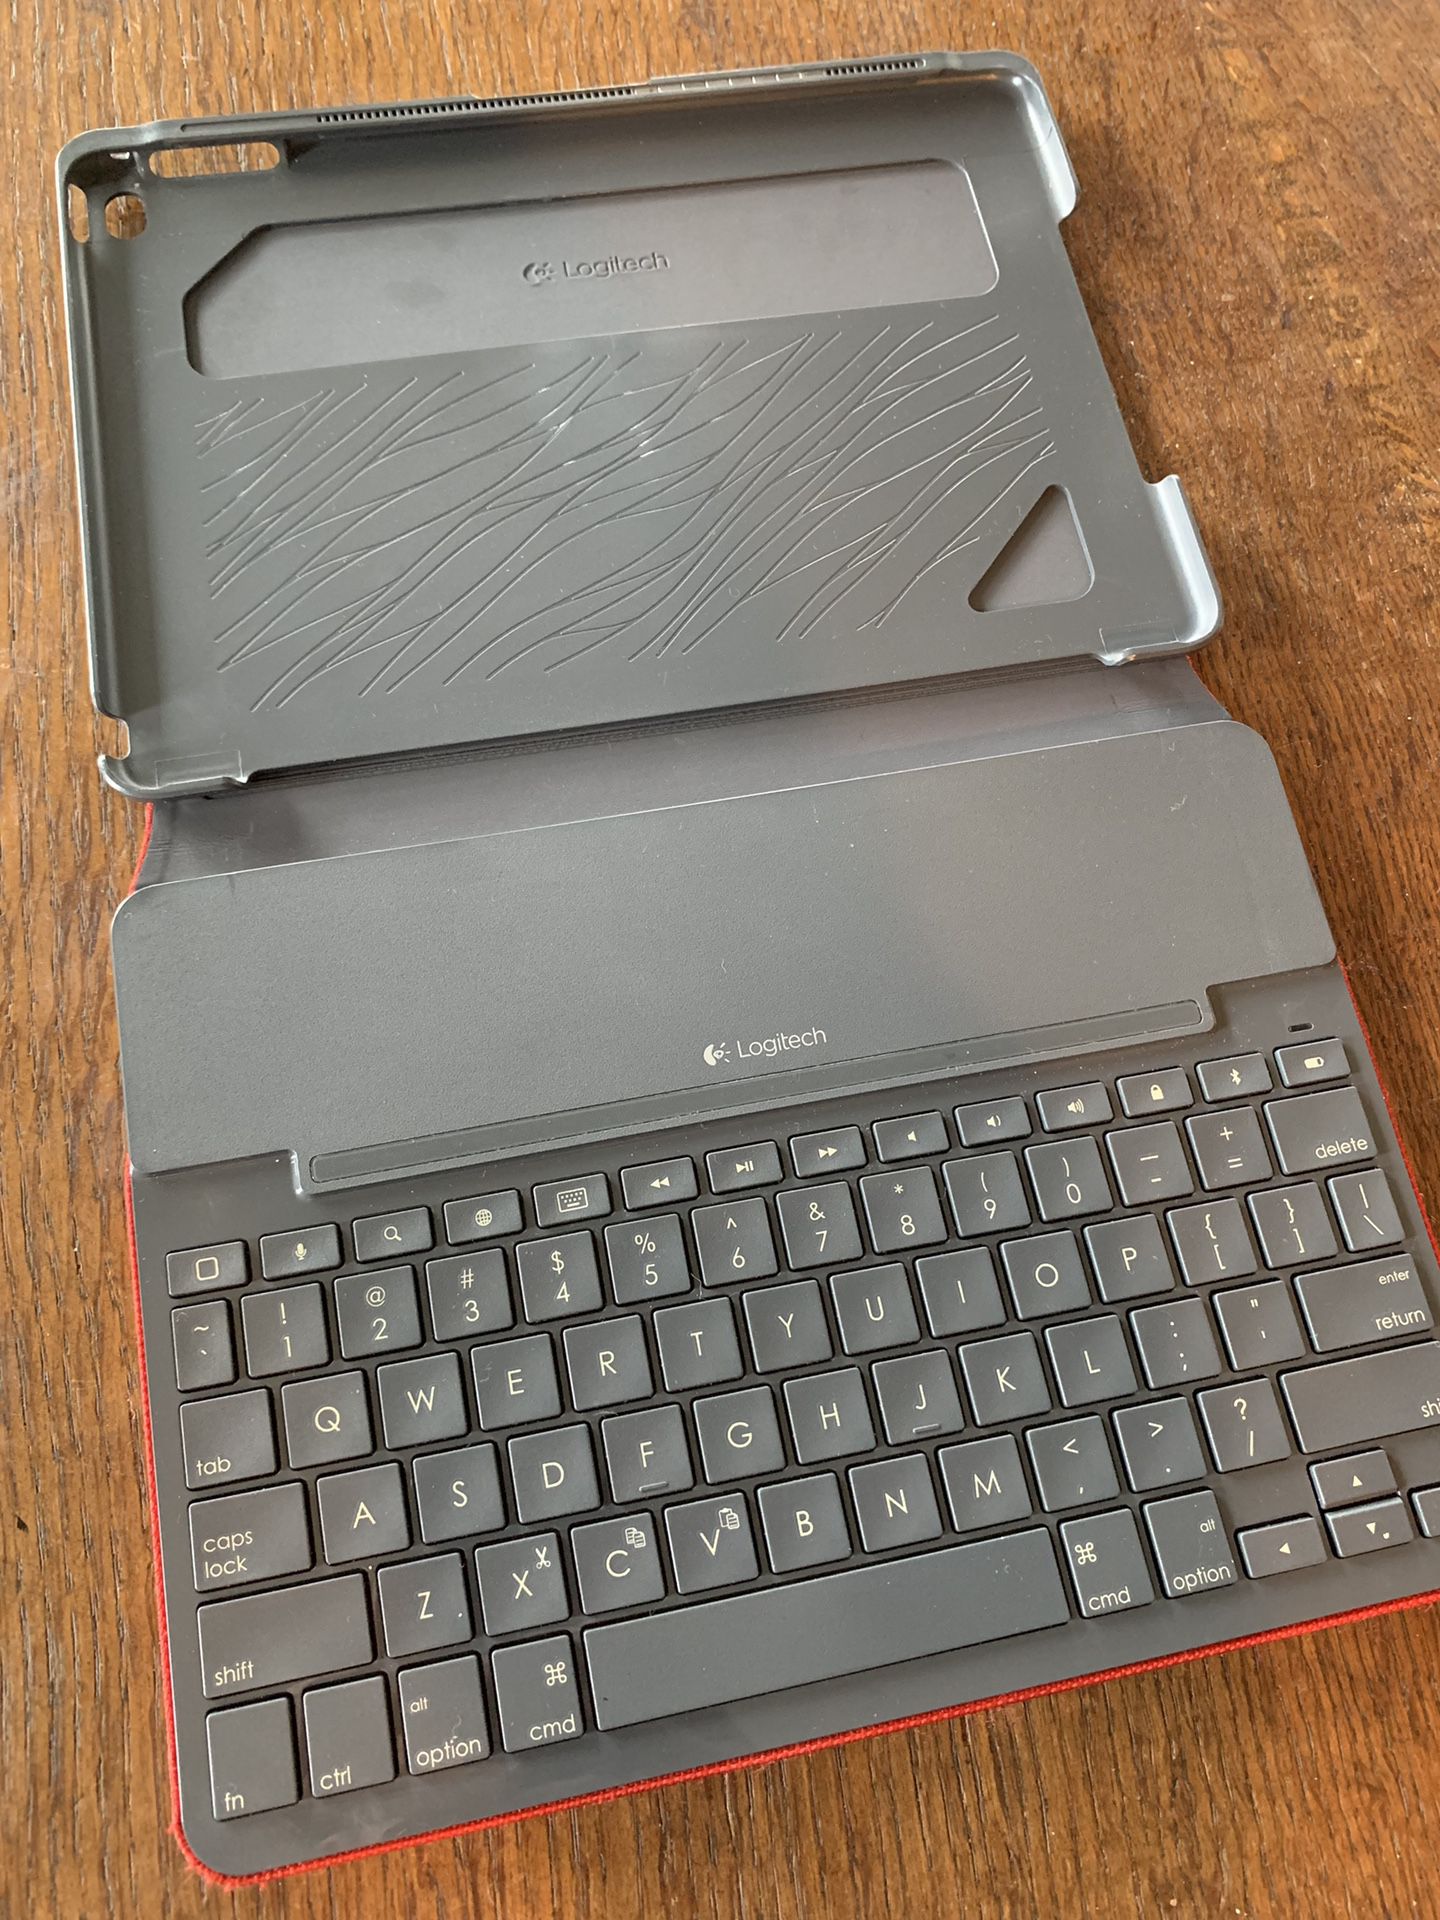 iPad 2 Air Logitech Keyboard and Cover. Nice!